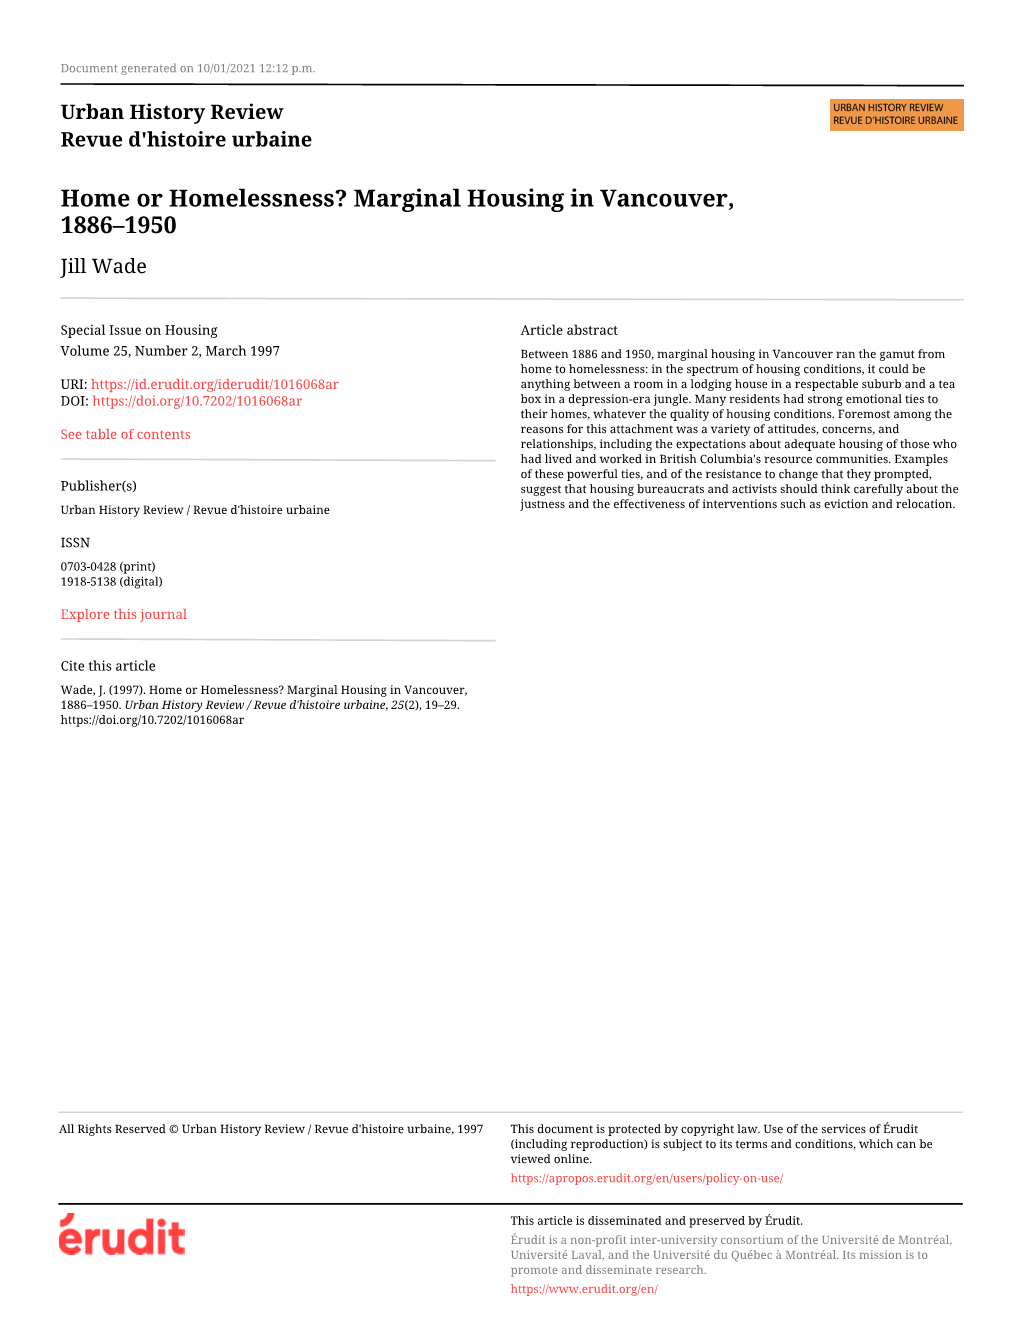 Marginal Housing in Vancouver, 1886–1950 Jill Wade